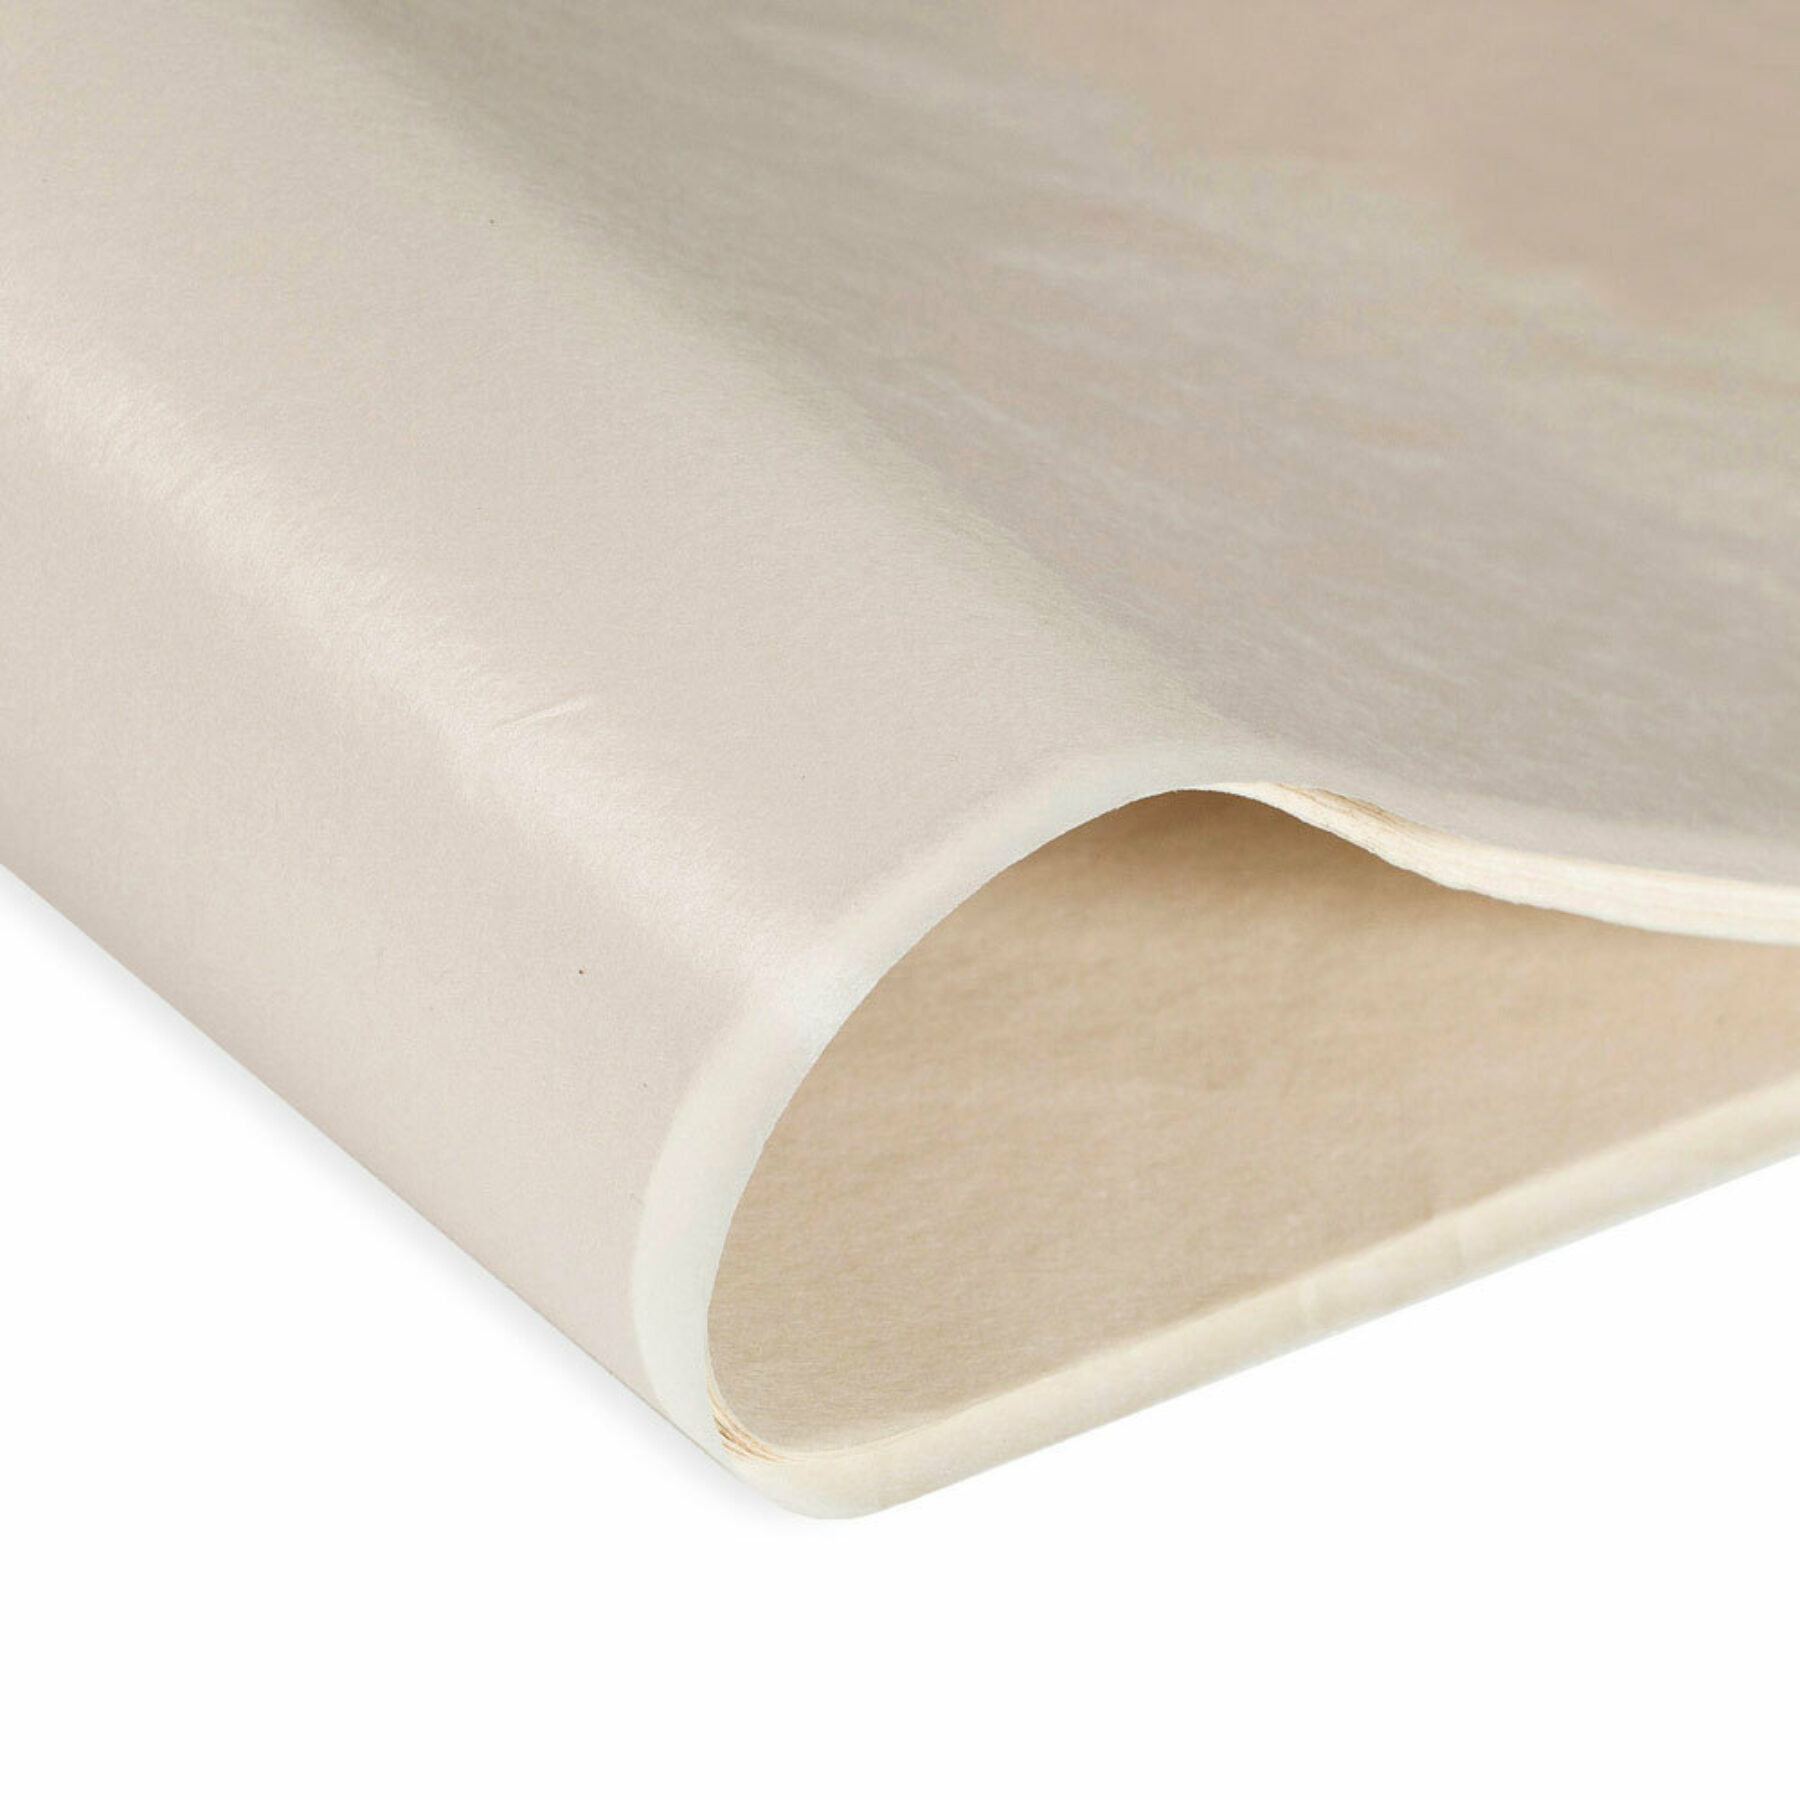 Cream Tissue Paper (480 sheets)